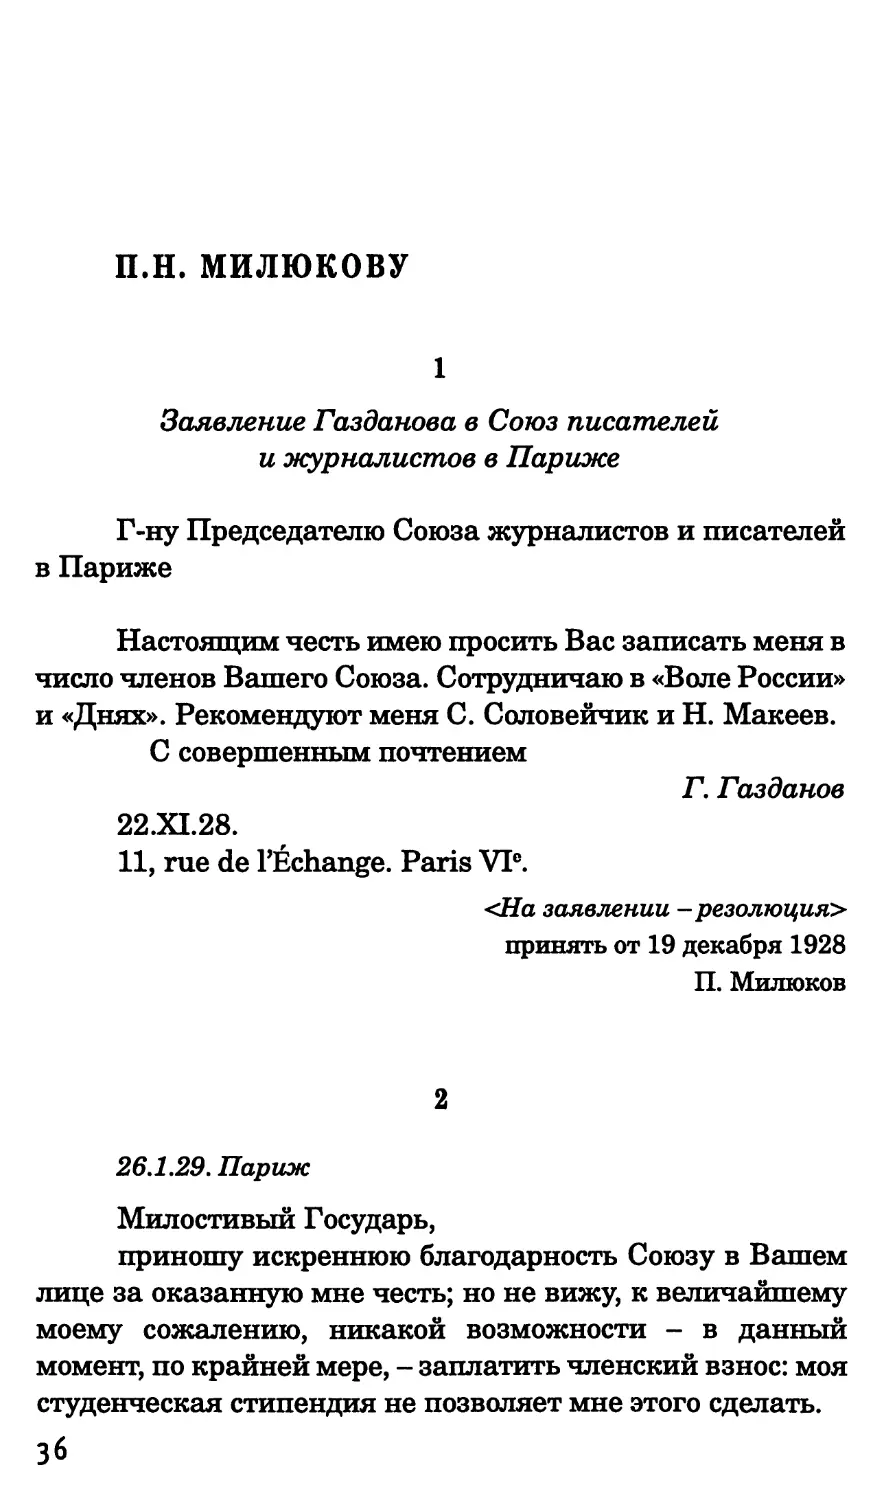 П.Н. Милюкову
2. 26 января 1929 г.